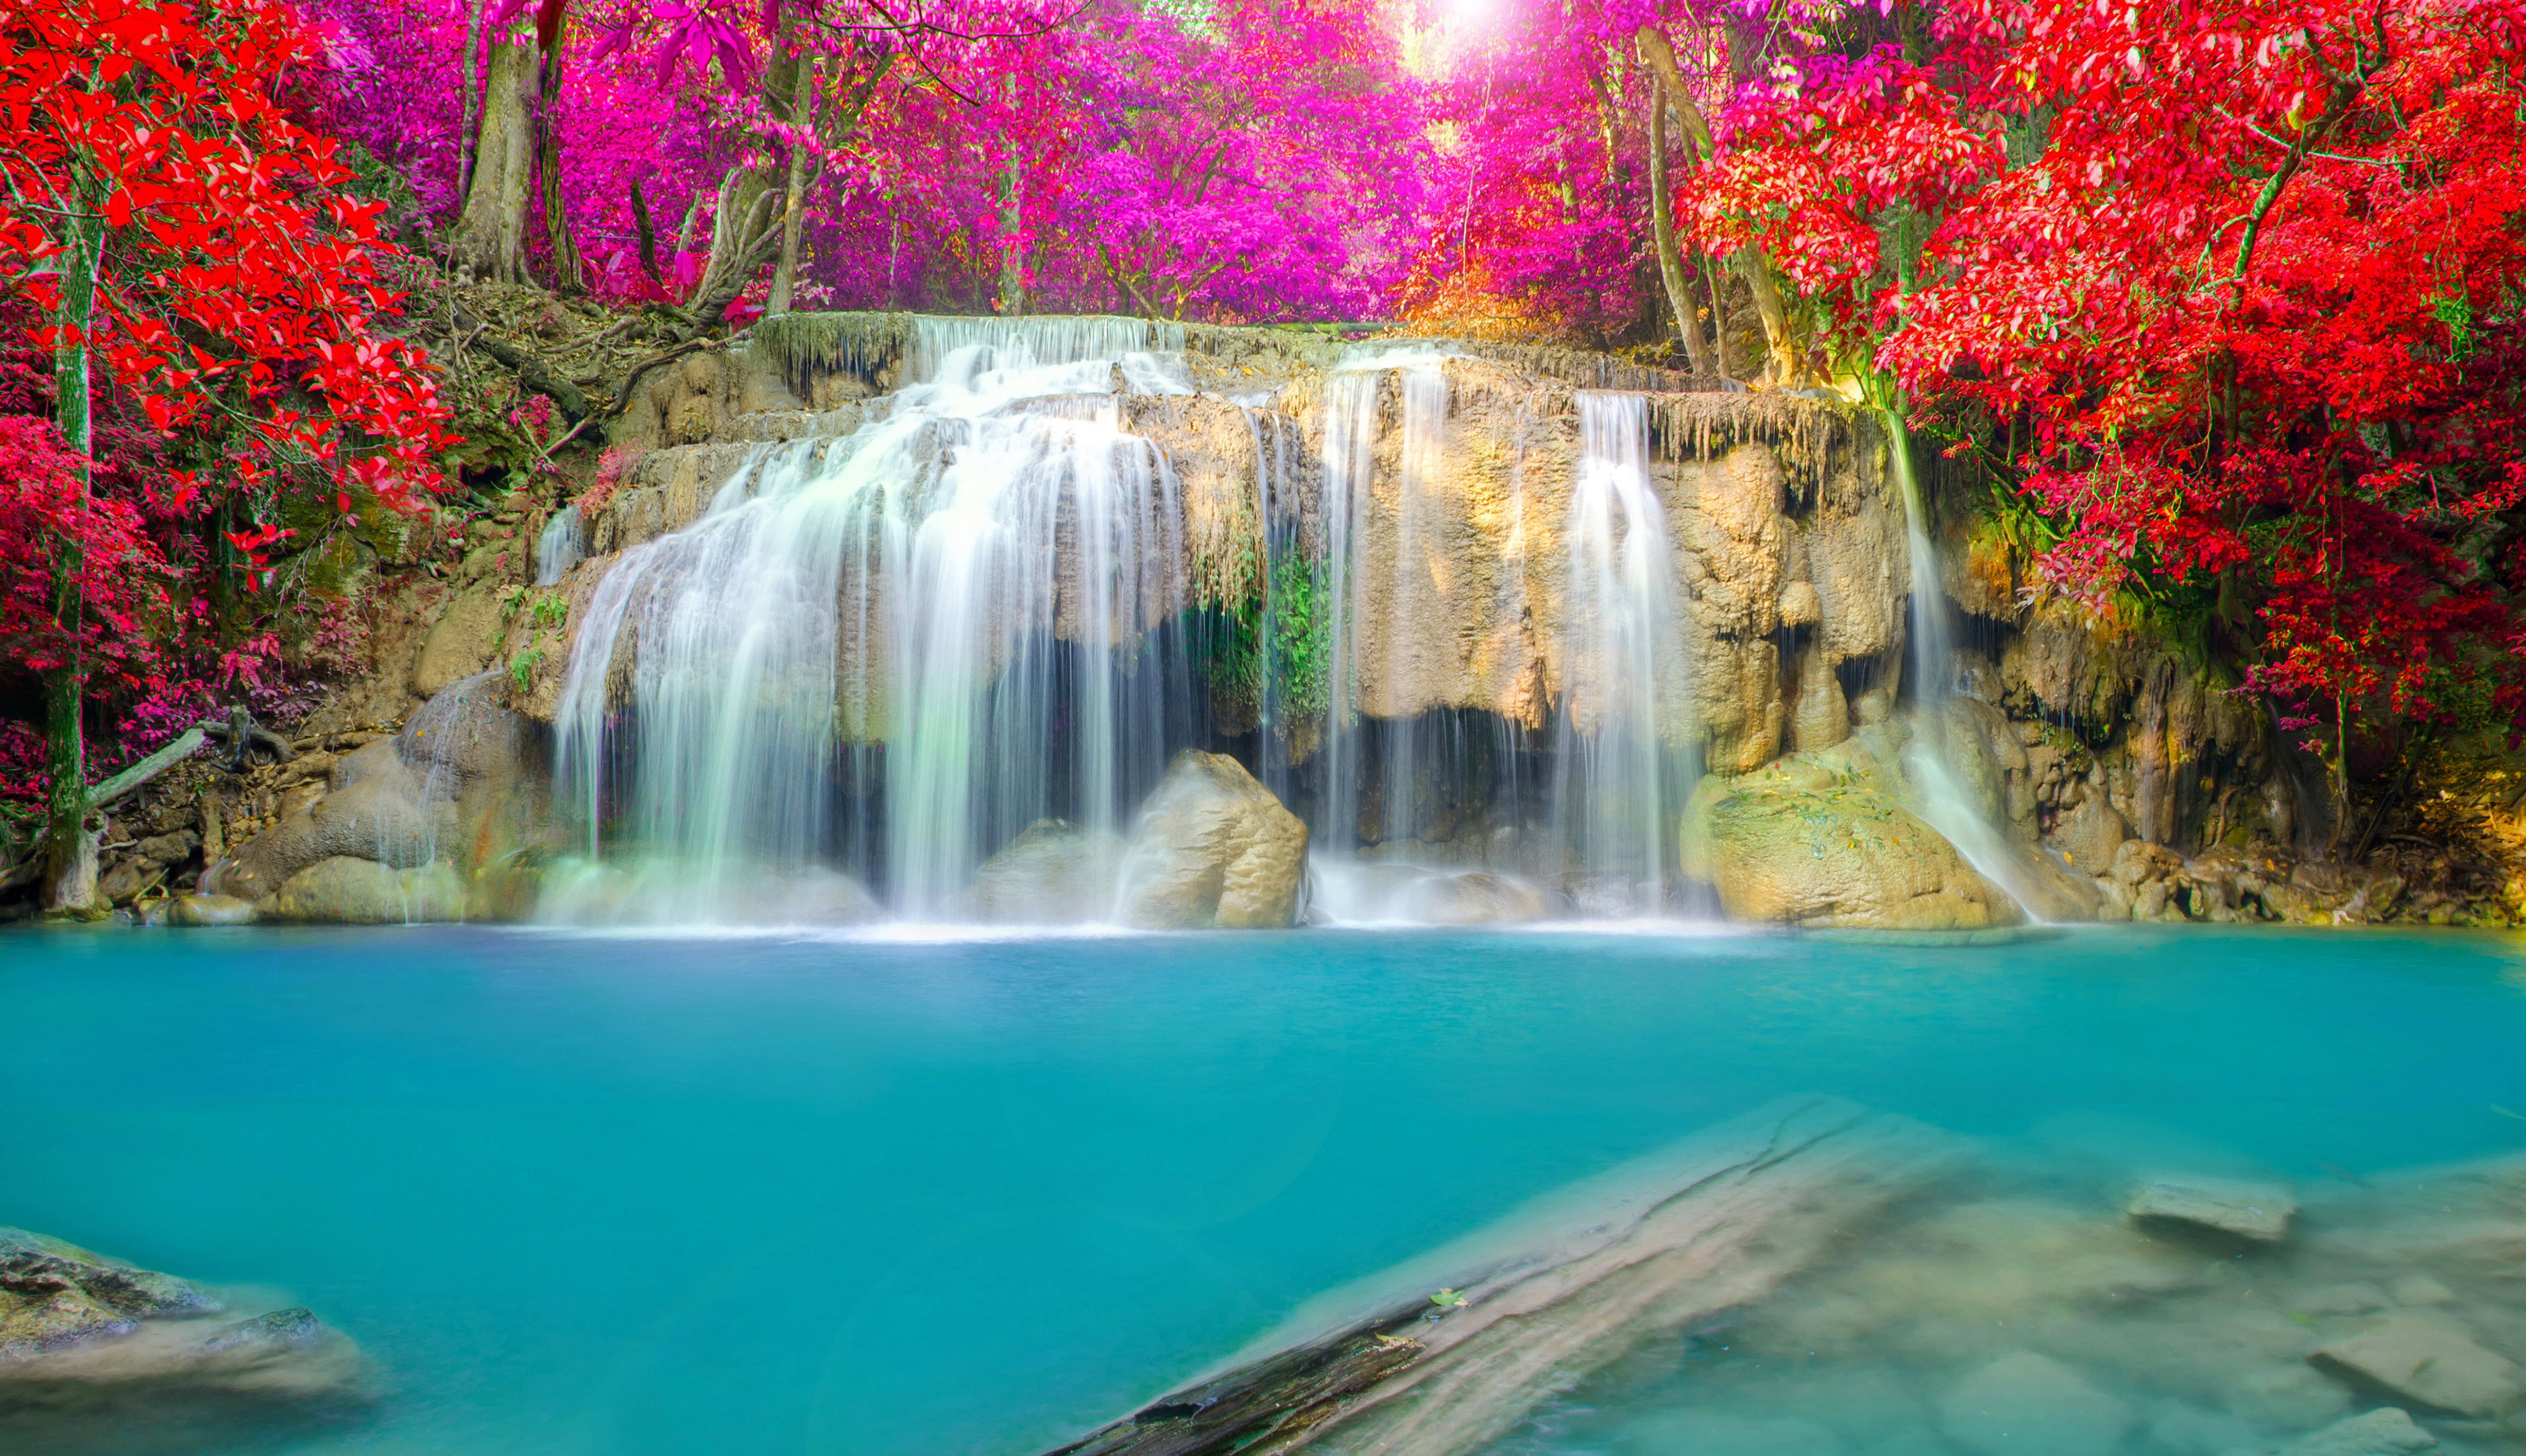 Autumn Colors in the Erawan National Park (Erawan Waterfall) in Thailand Parks, 7000x4036. (Belle Deesse, 21 Dec 2014)